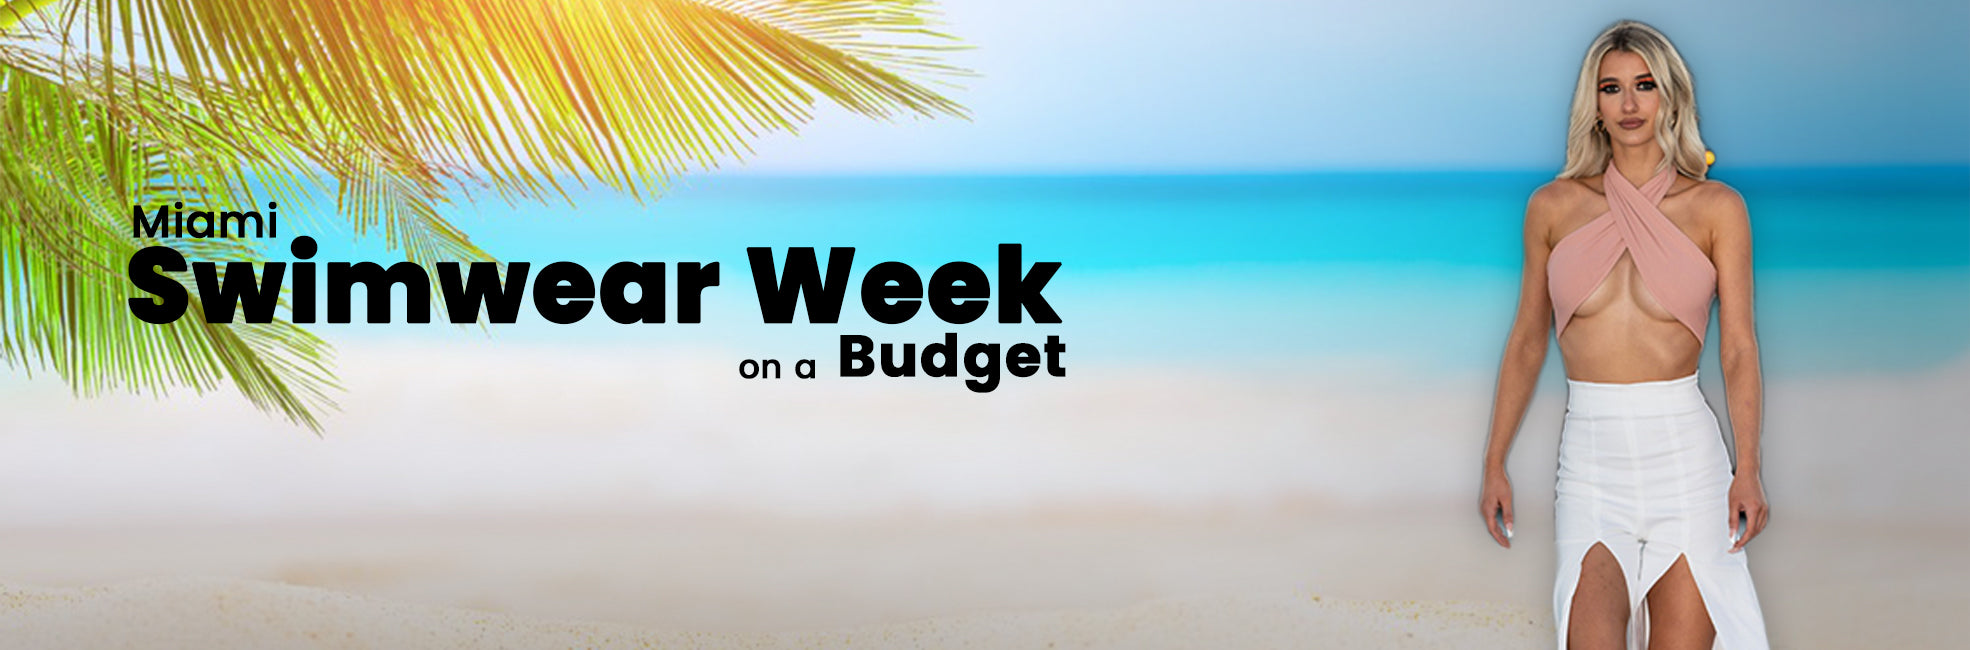 Miami Swimwear Week on a Budget: Affordable Looks That Shine | House Of Dani B.